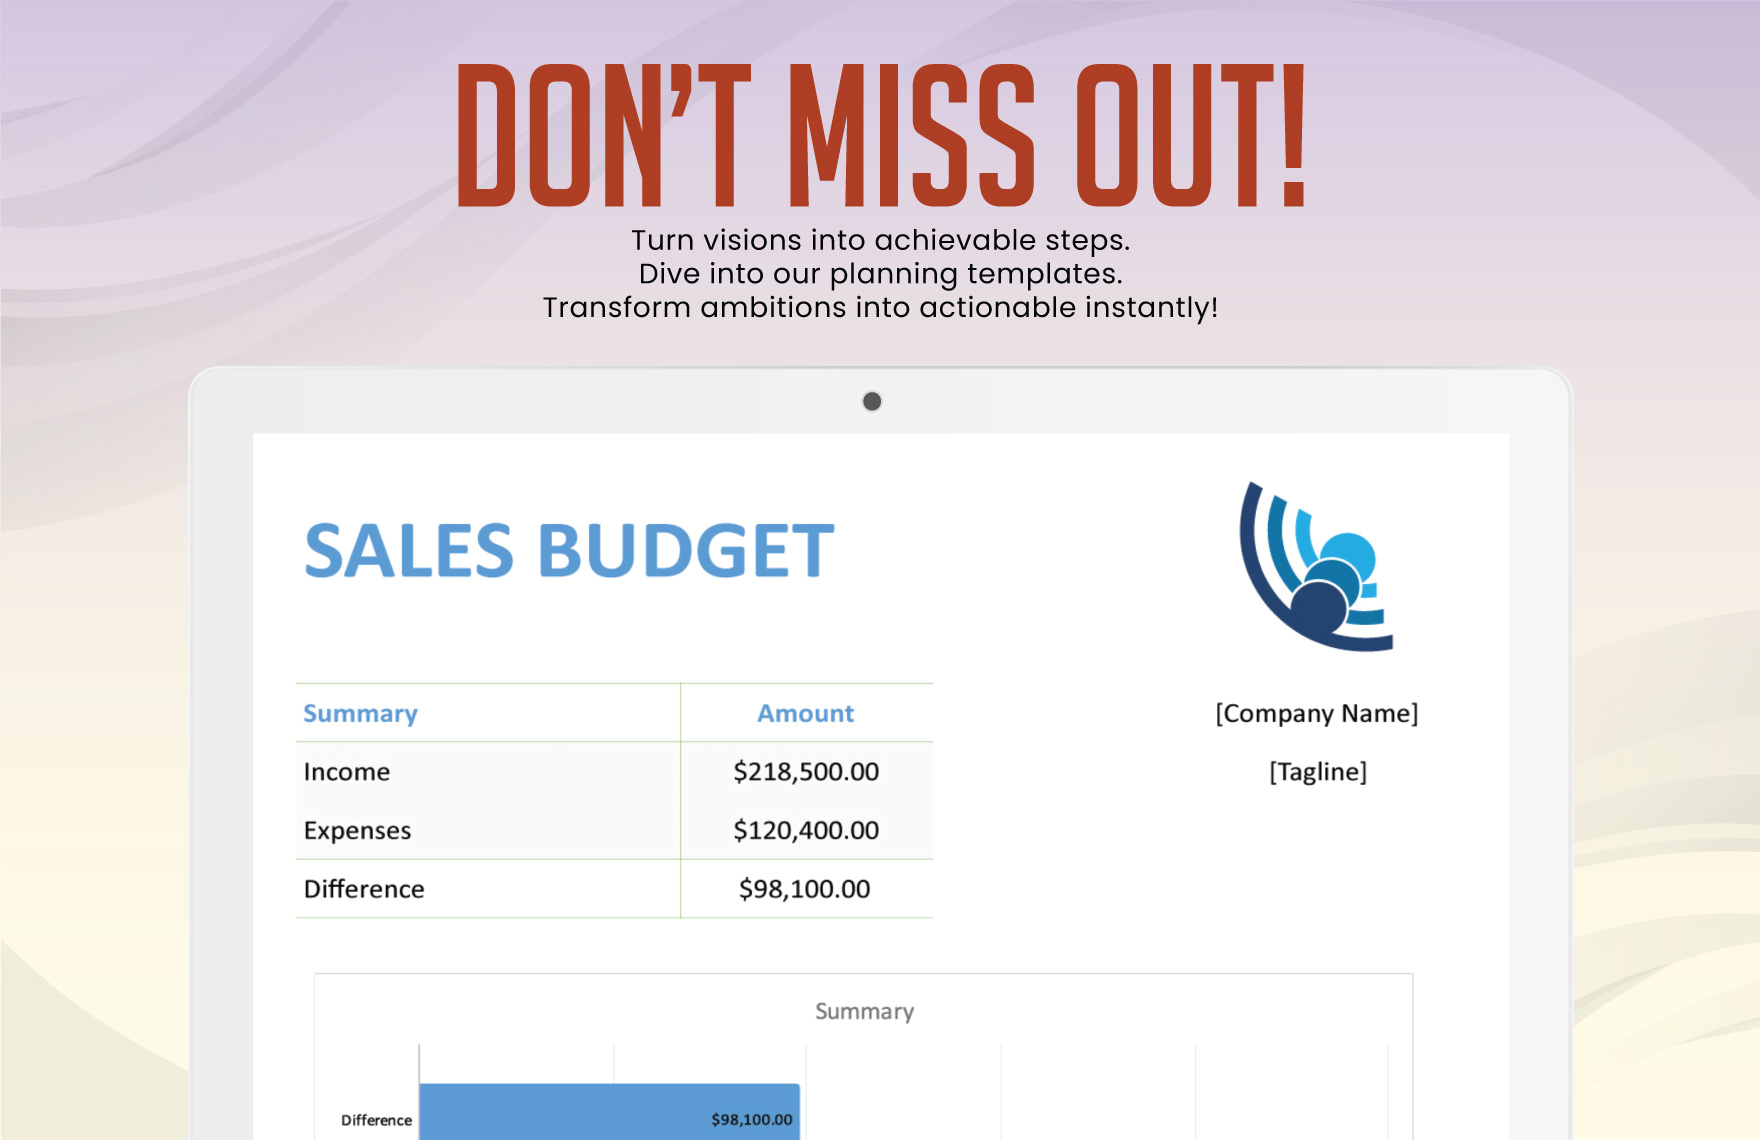 Sample Sales Budget Template